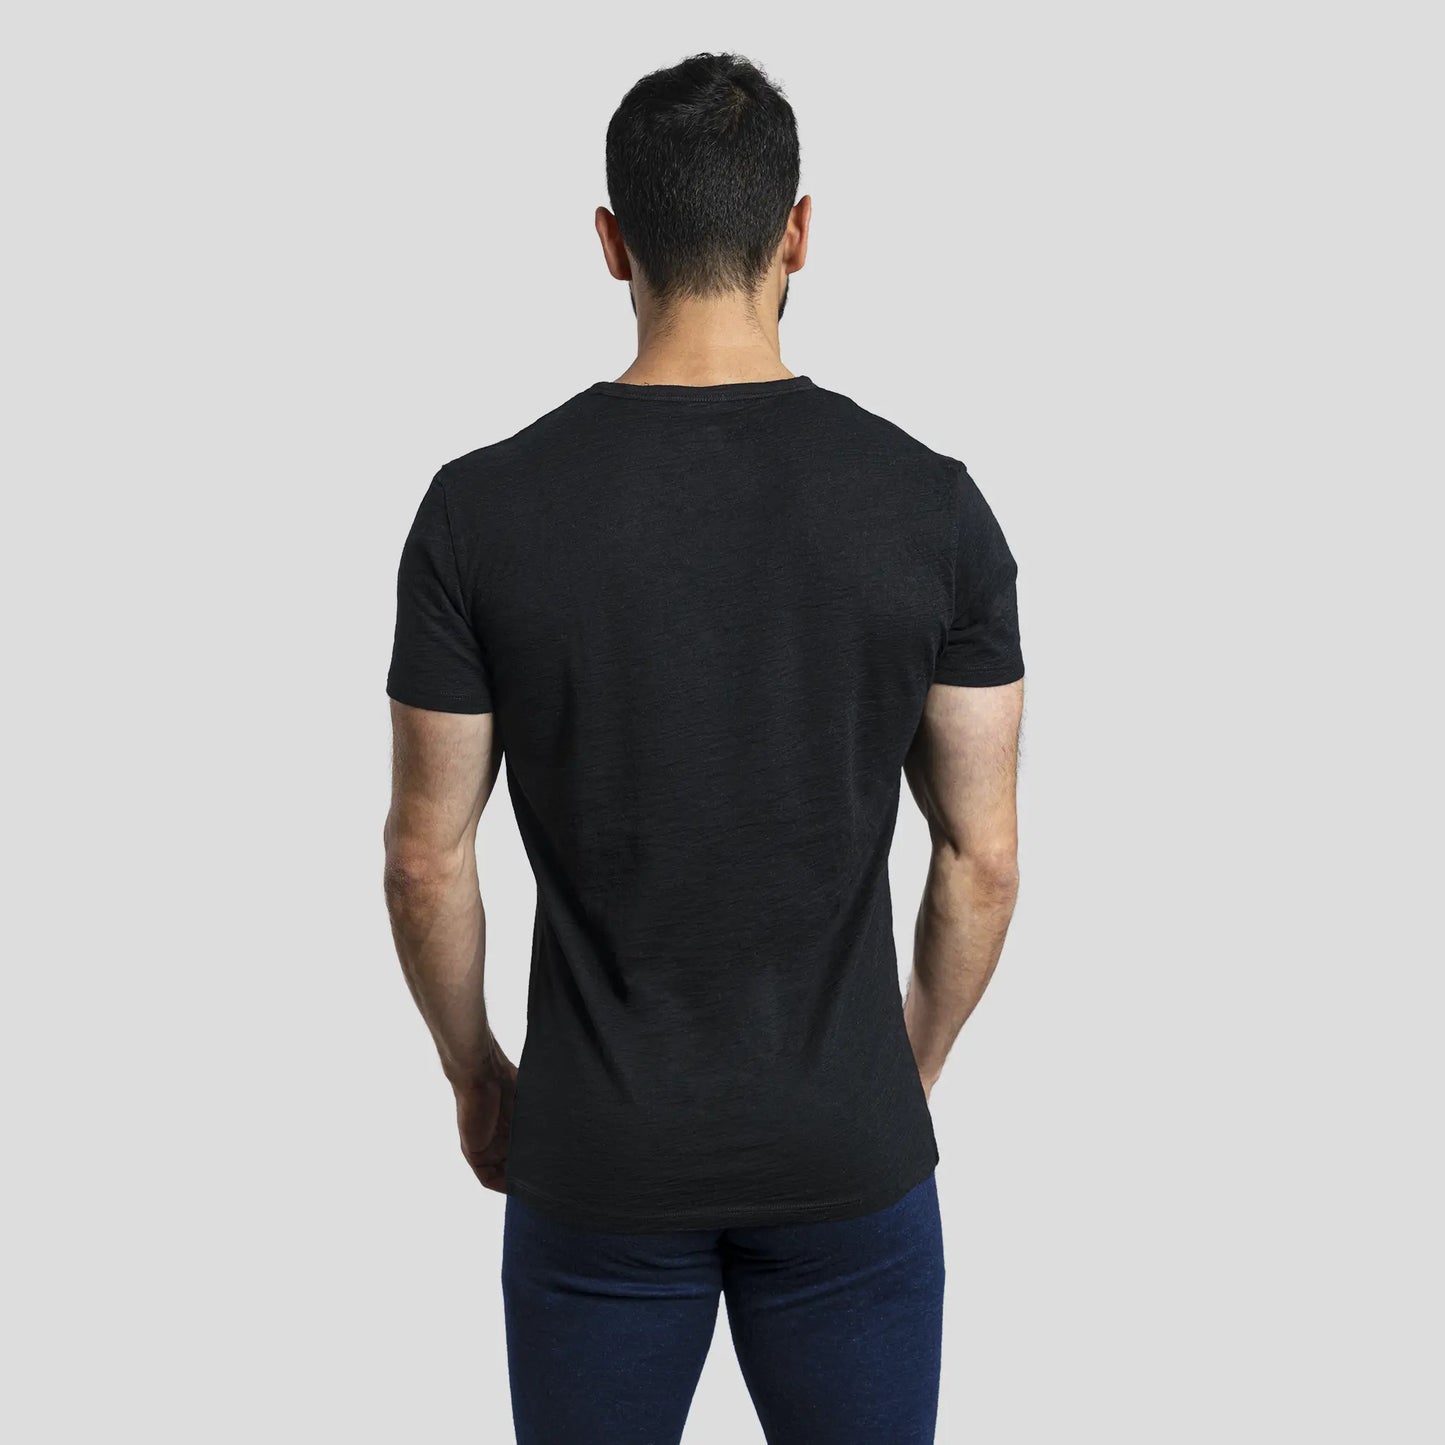 mens thermal wool crew neck tshirt color black